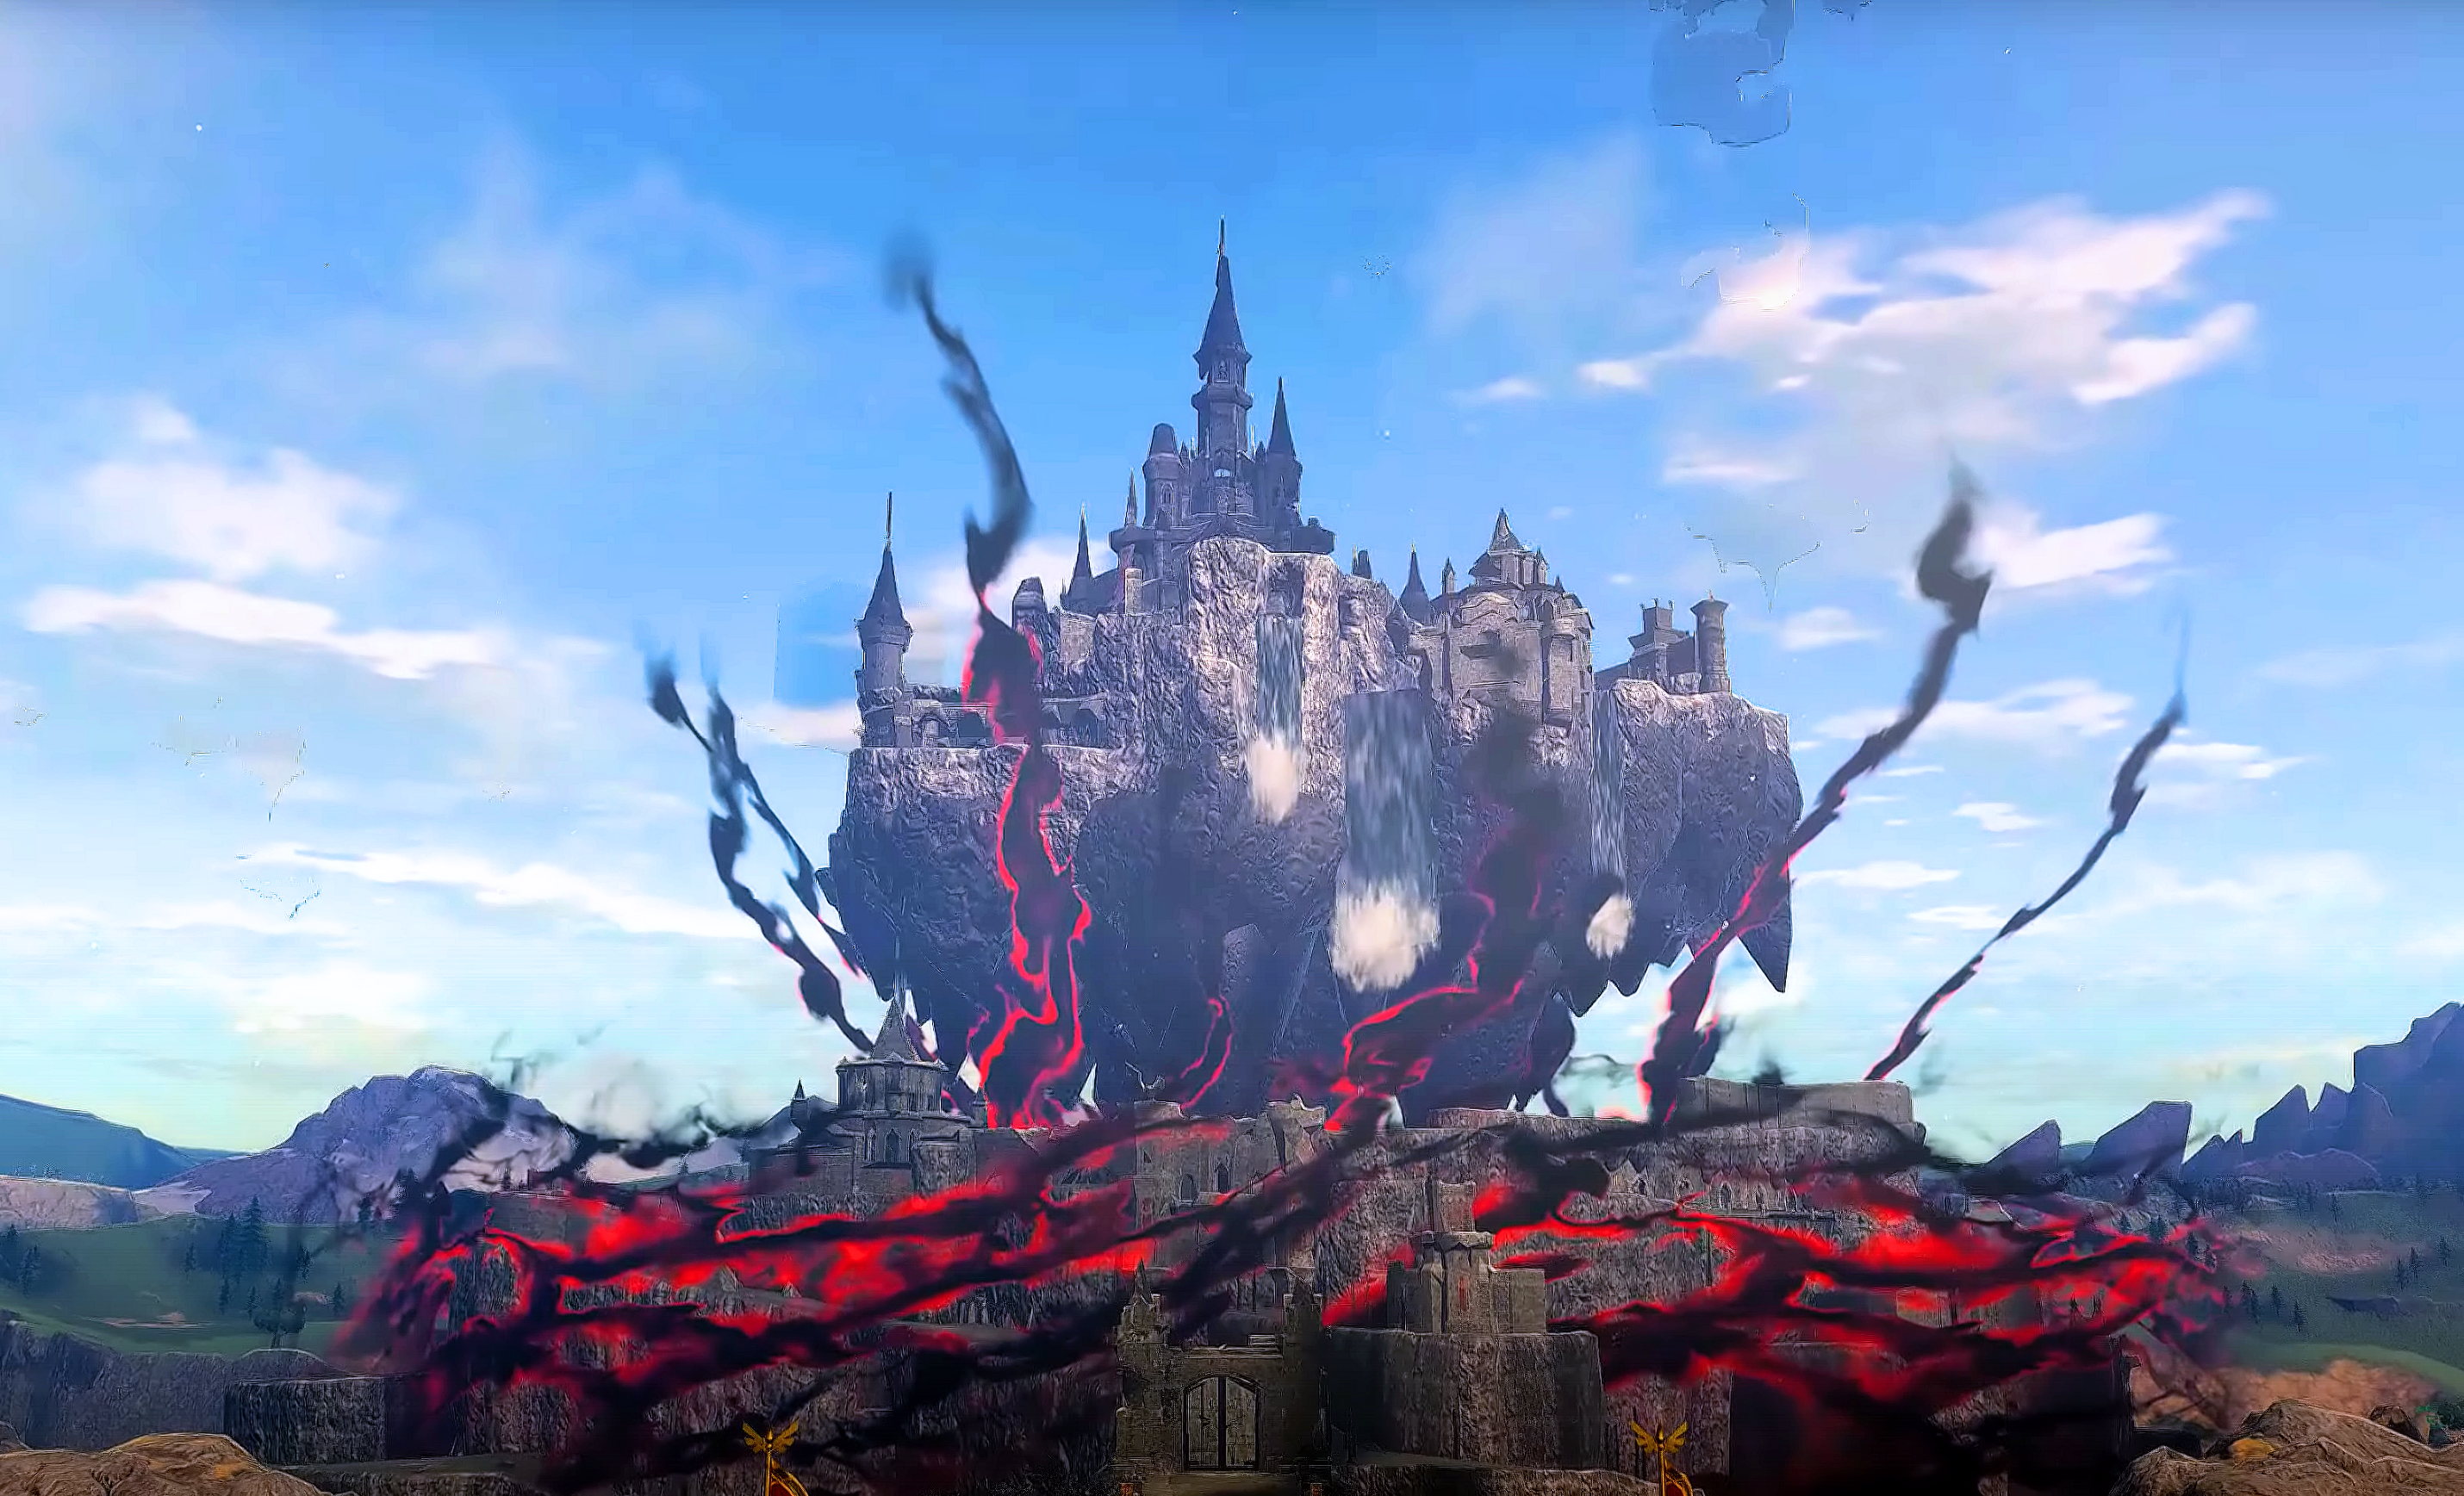 Hyrule Castle (A Link to the Past) - Zelda Wiki